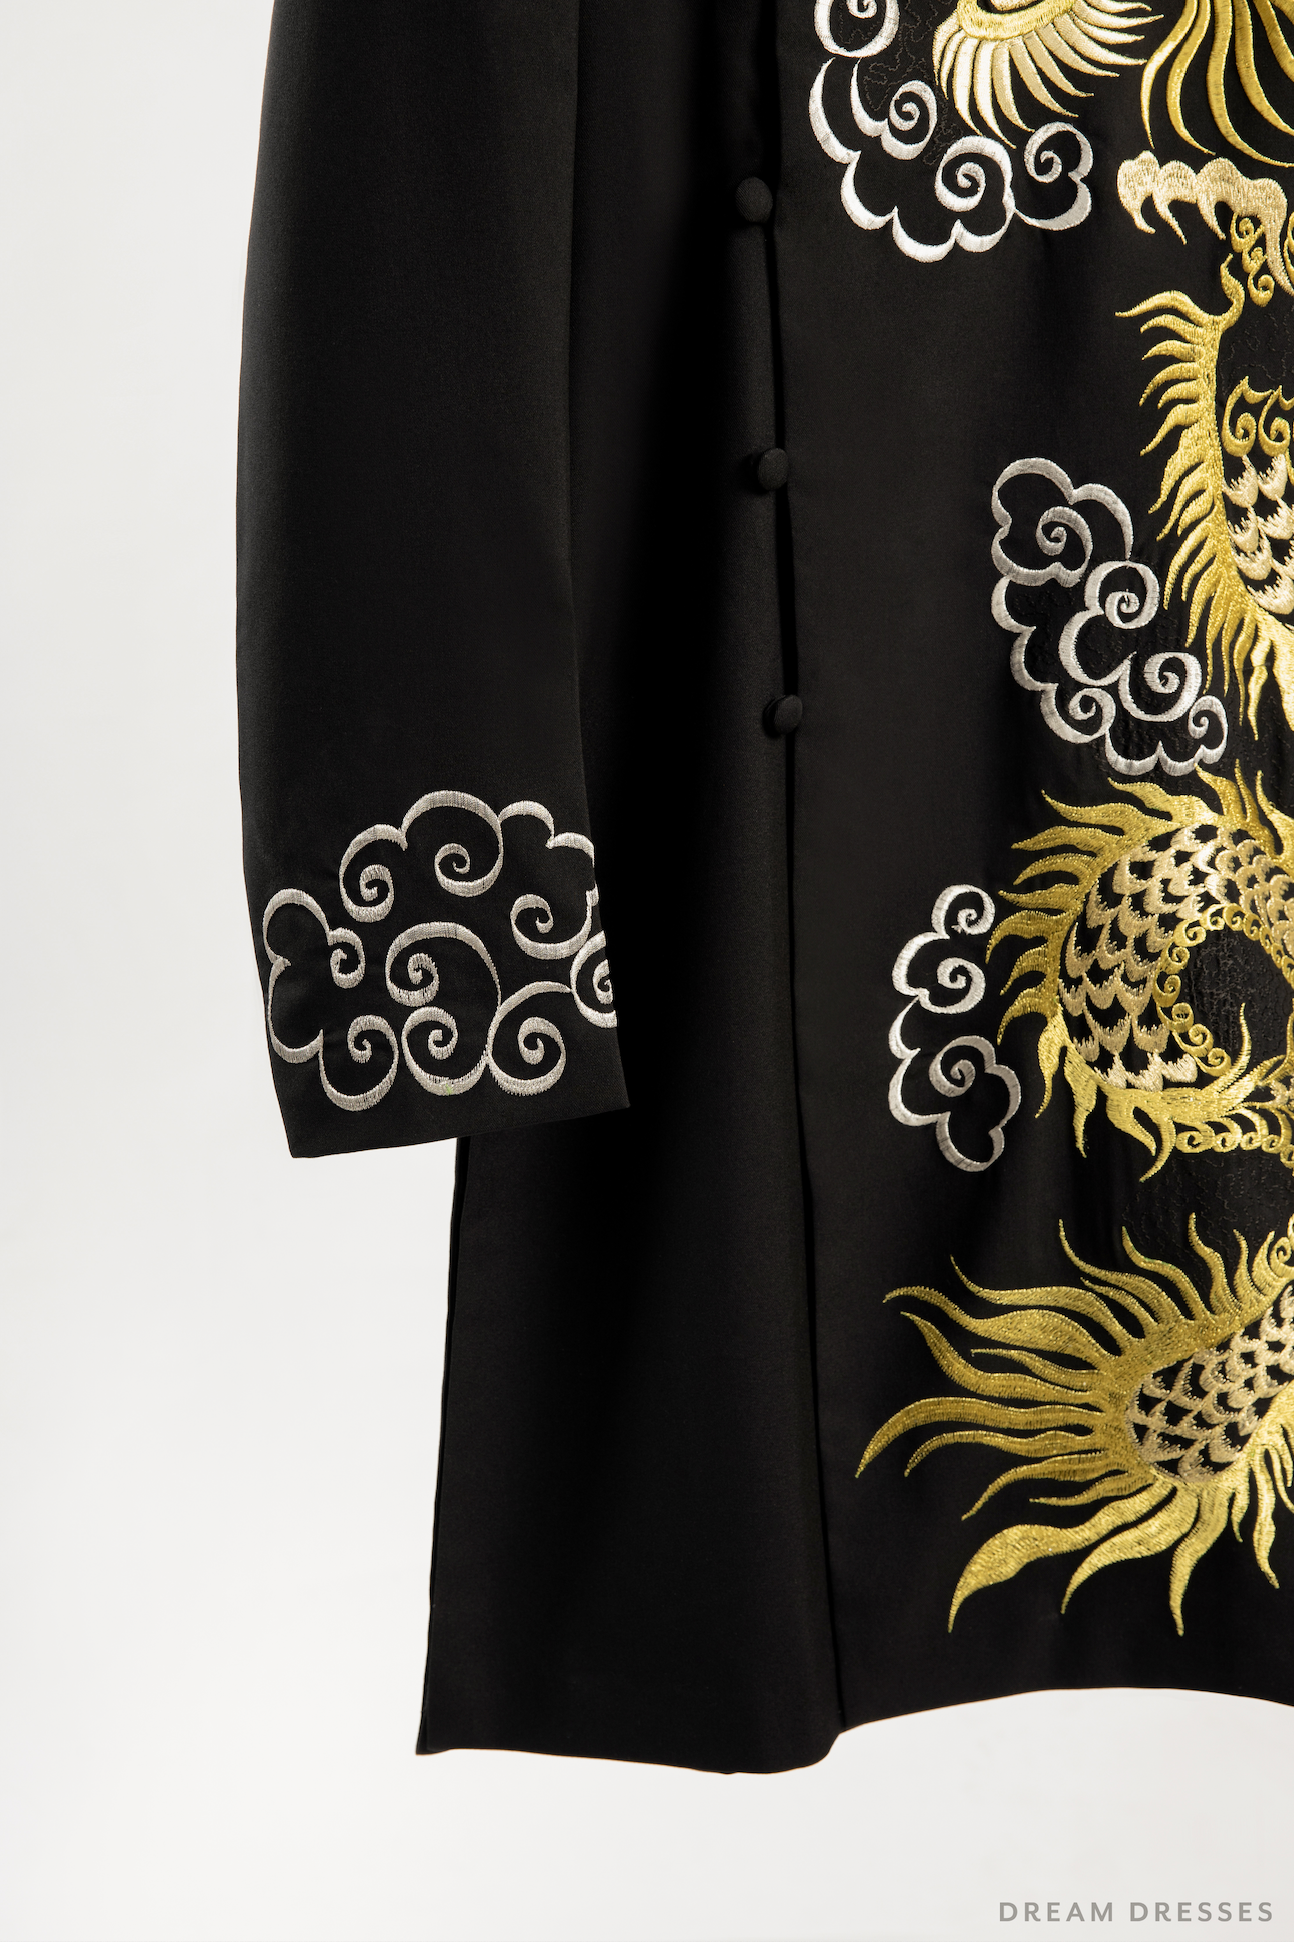 Black Groom Ao Dai Jacket with Dragon Embroidery | Vietnamese Ao Dai (#Shin)